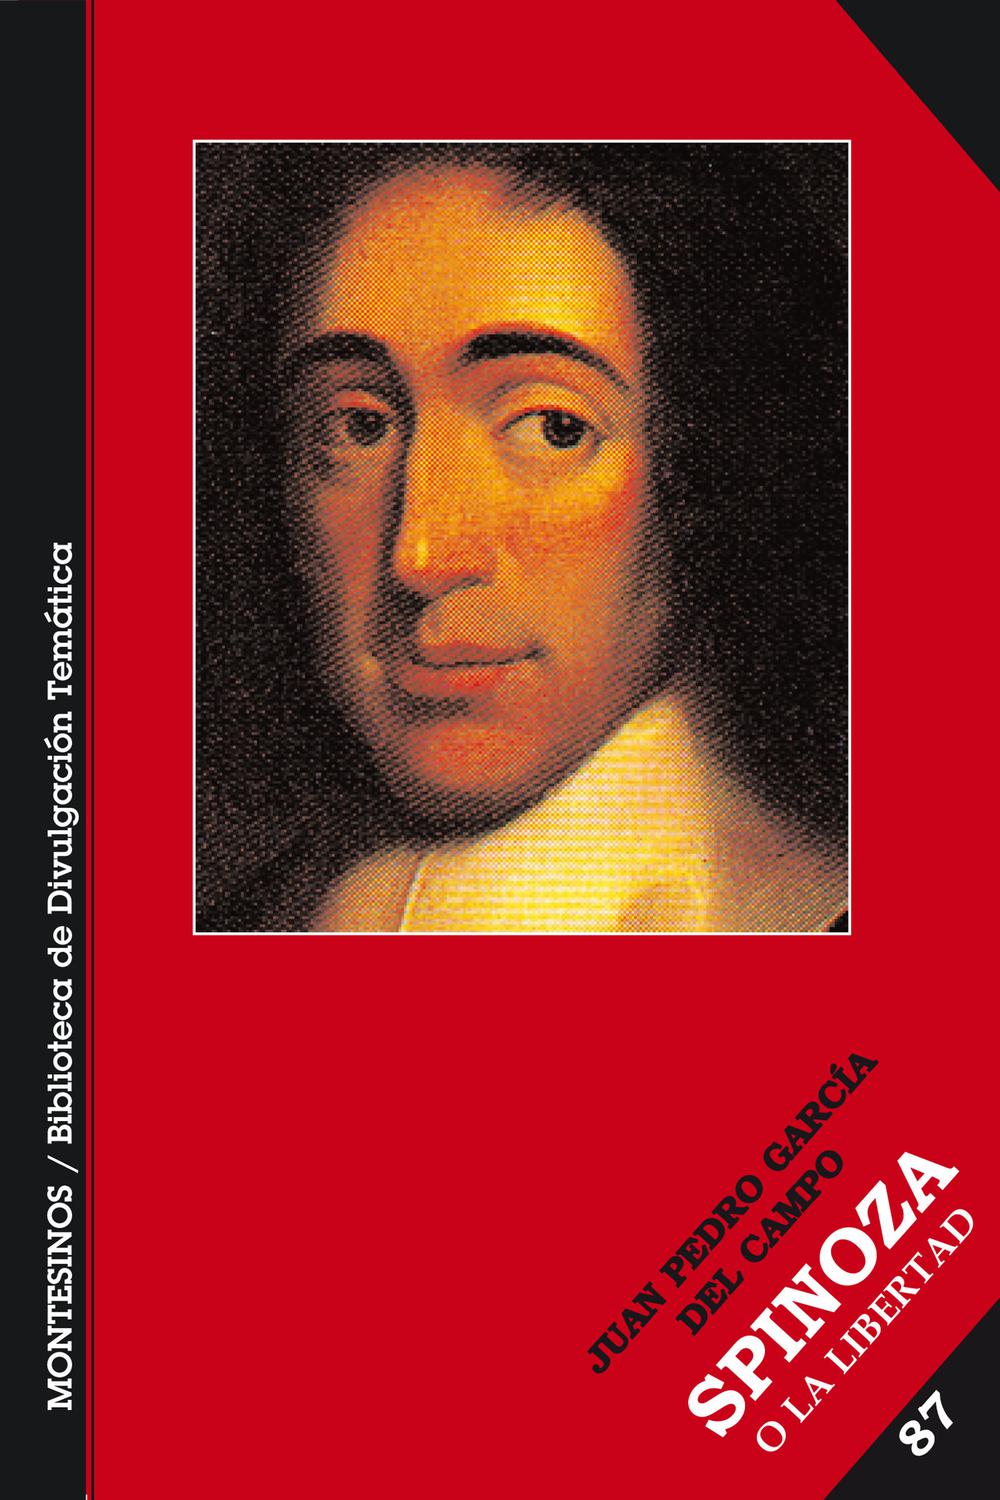 Spinoza o la libertad